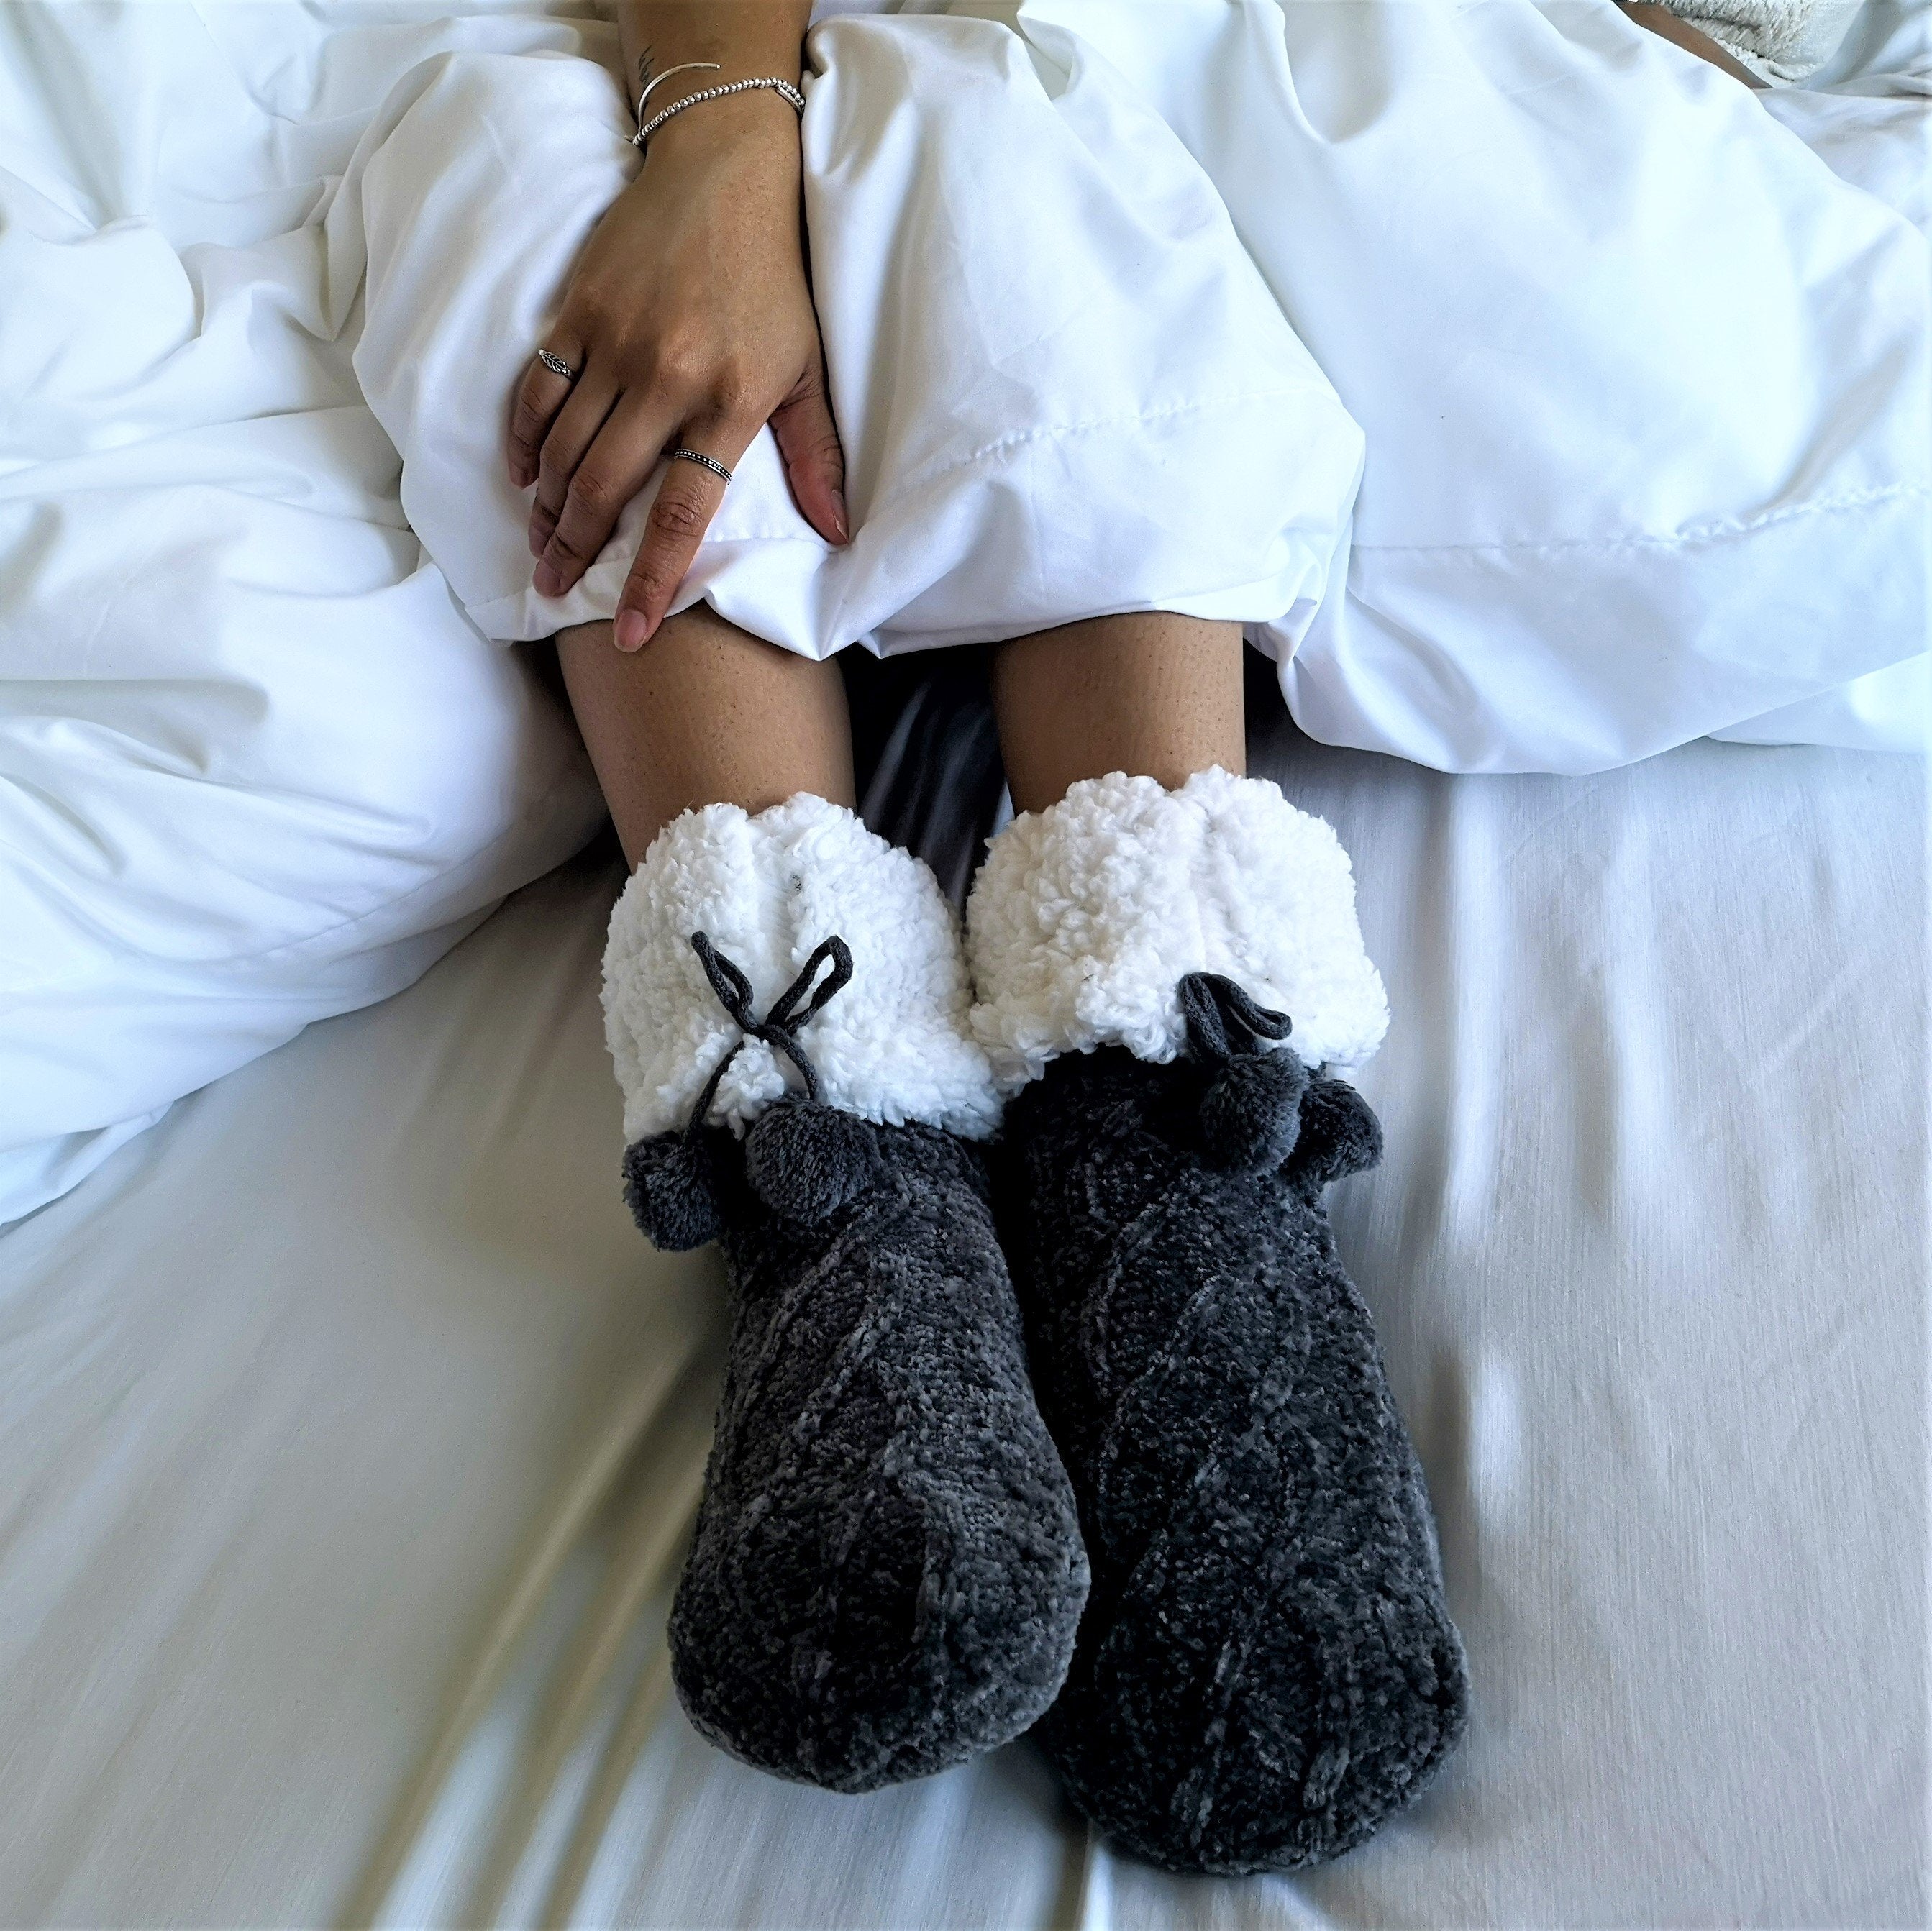 fluffy socks | Fuzzy socks, Fluffy socks, Fuzzy socks aesthetic